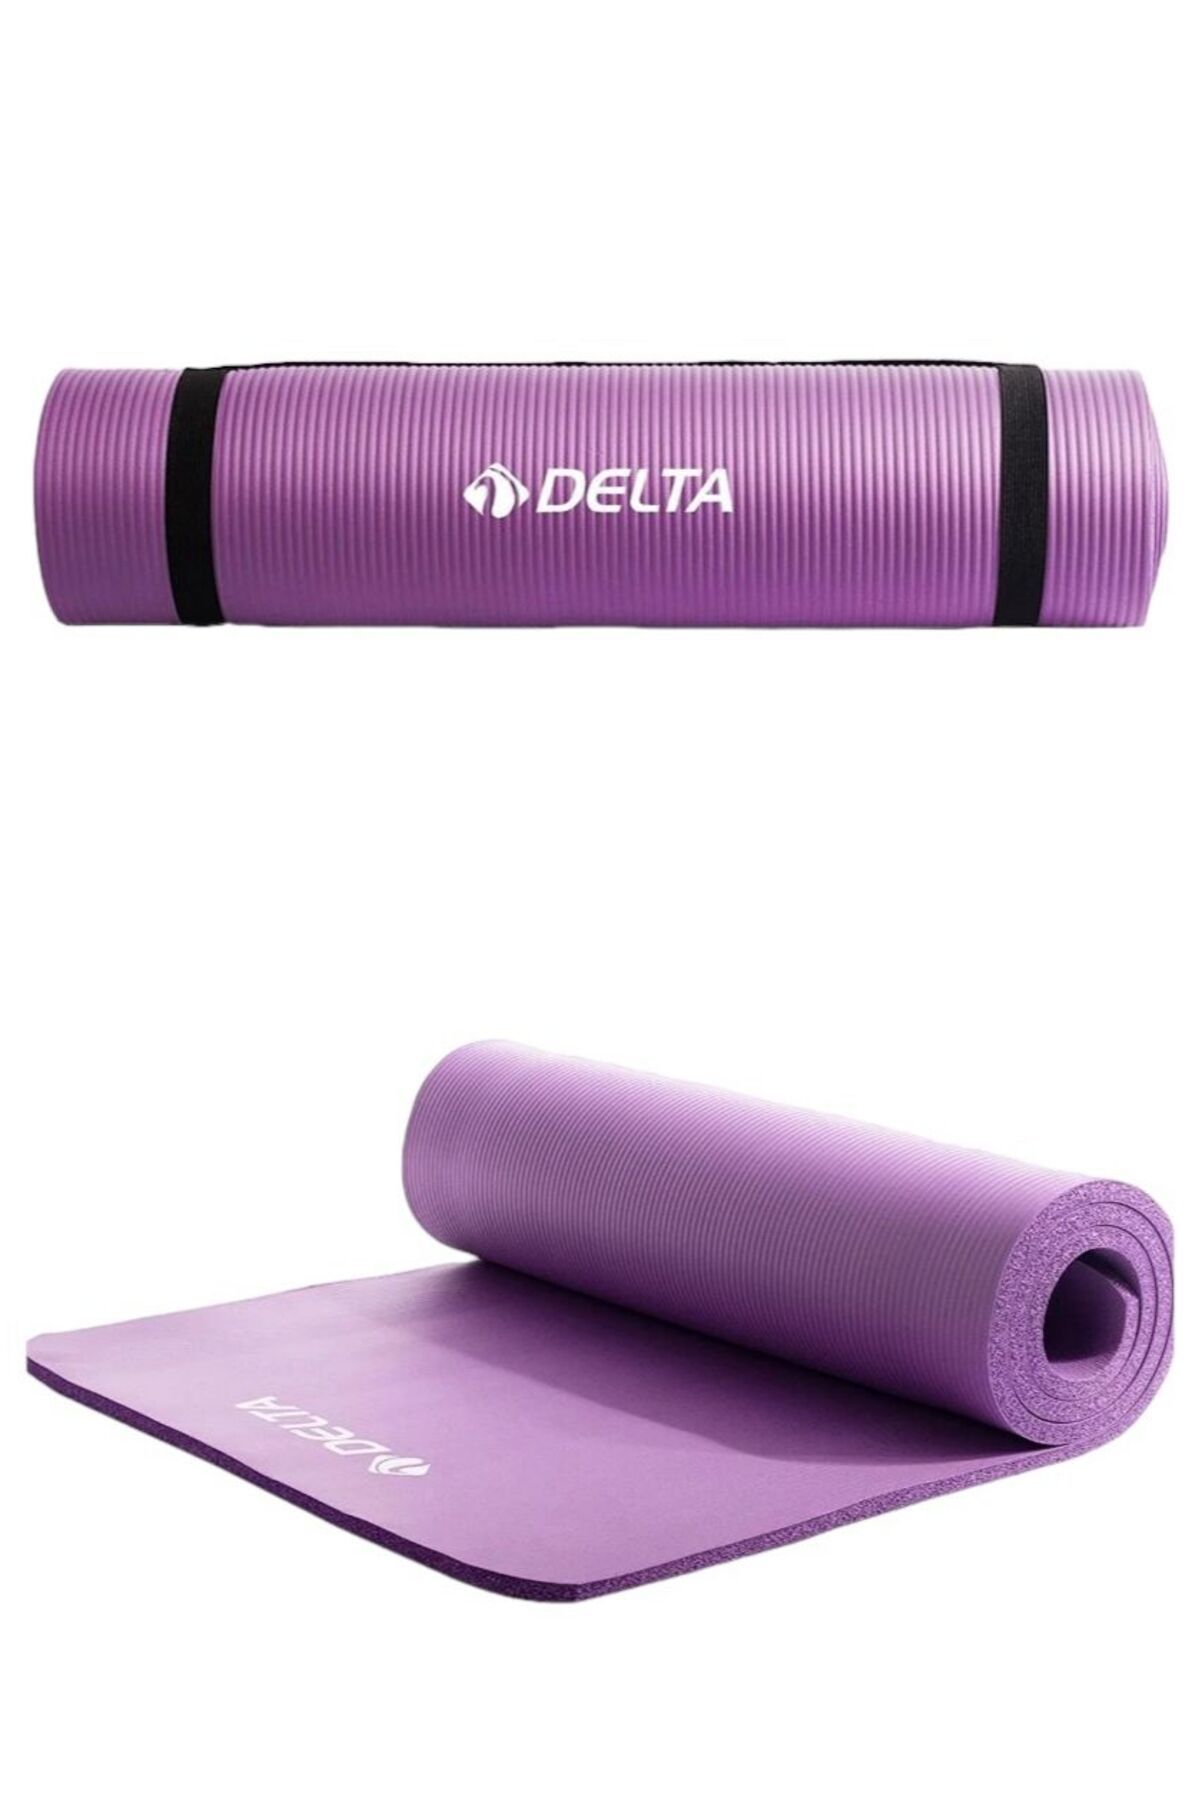 Delta 180 x 60 Konfor Zemin 10 mm Taşıma Askılı Pilates Minderi Yoga Matı Pilates 10 mm yok Mor